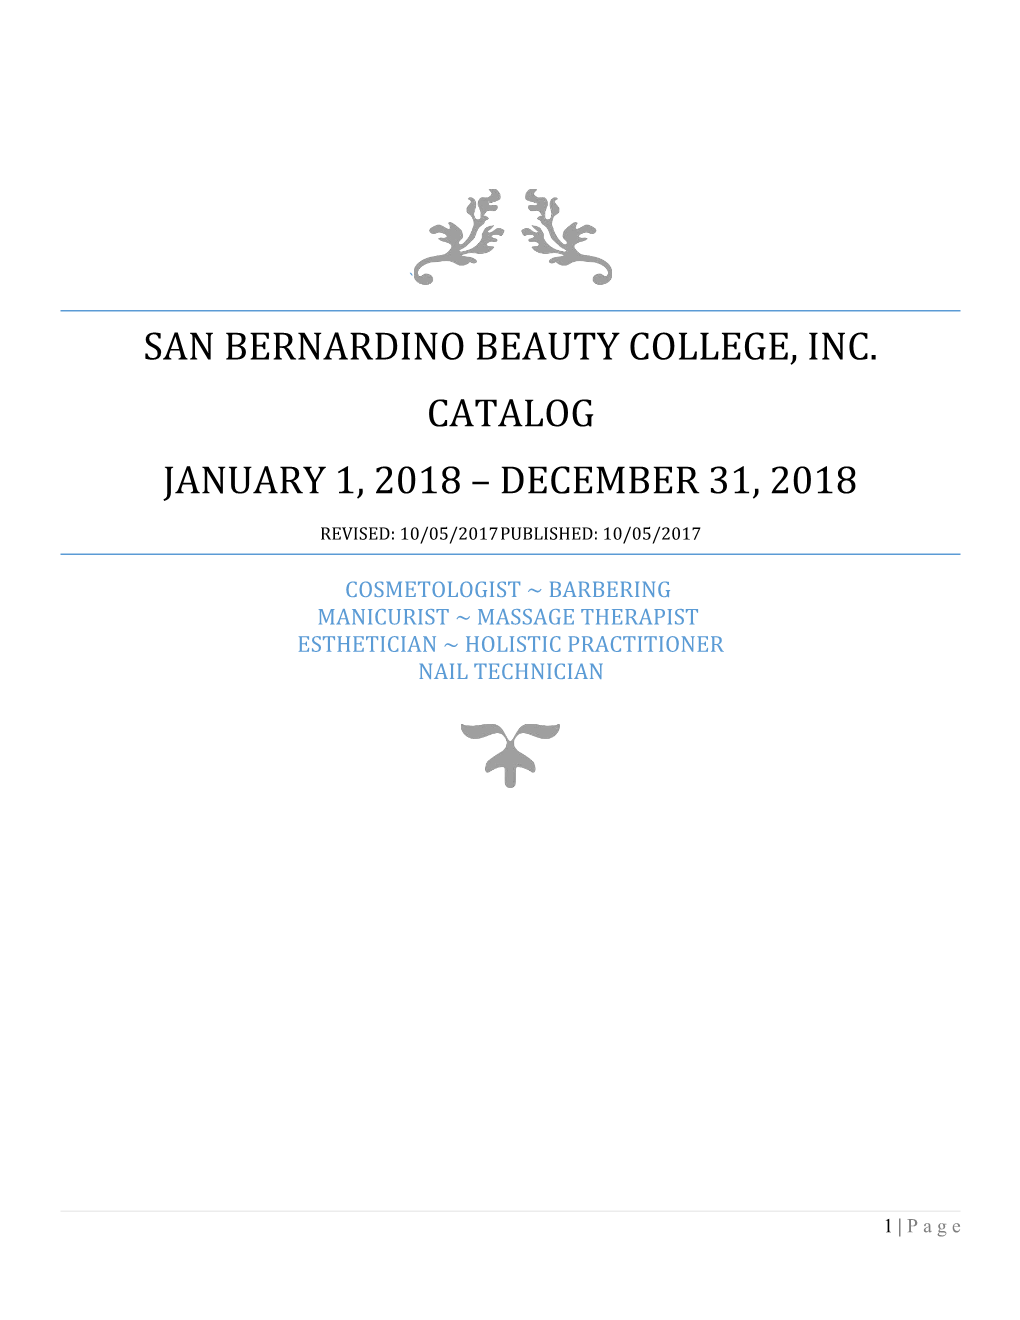 San Bernardino Beauty College